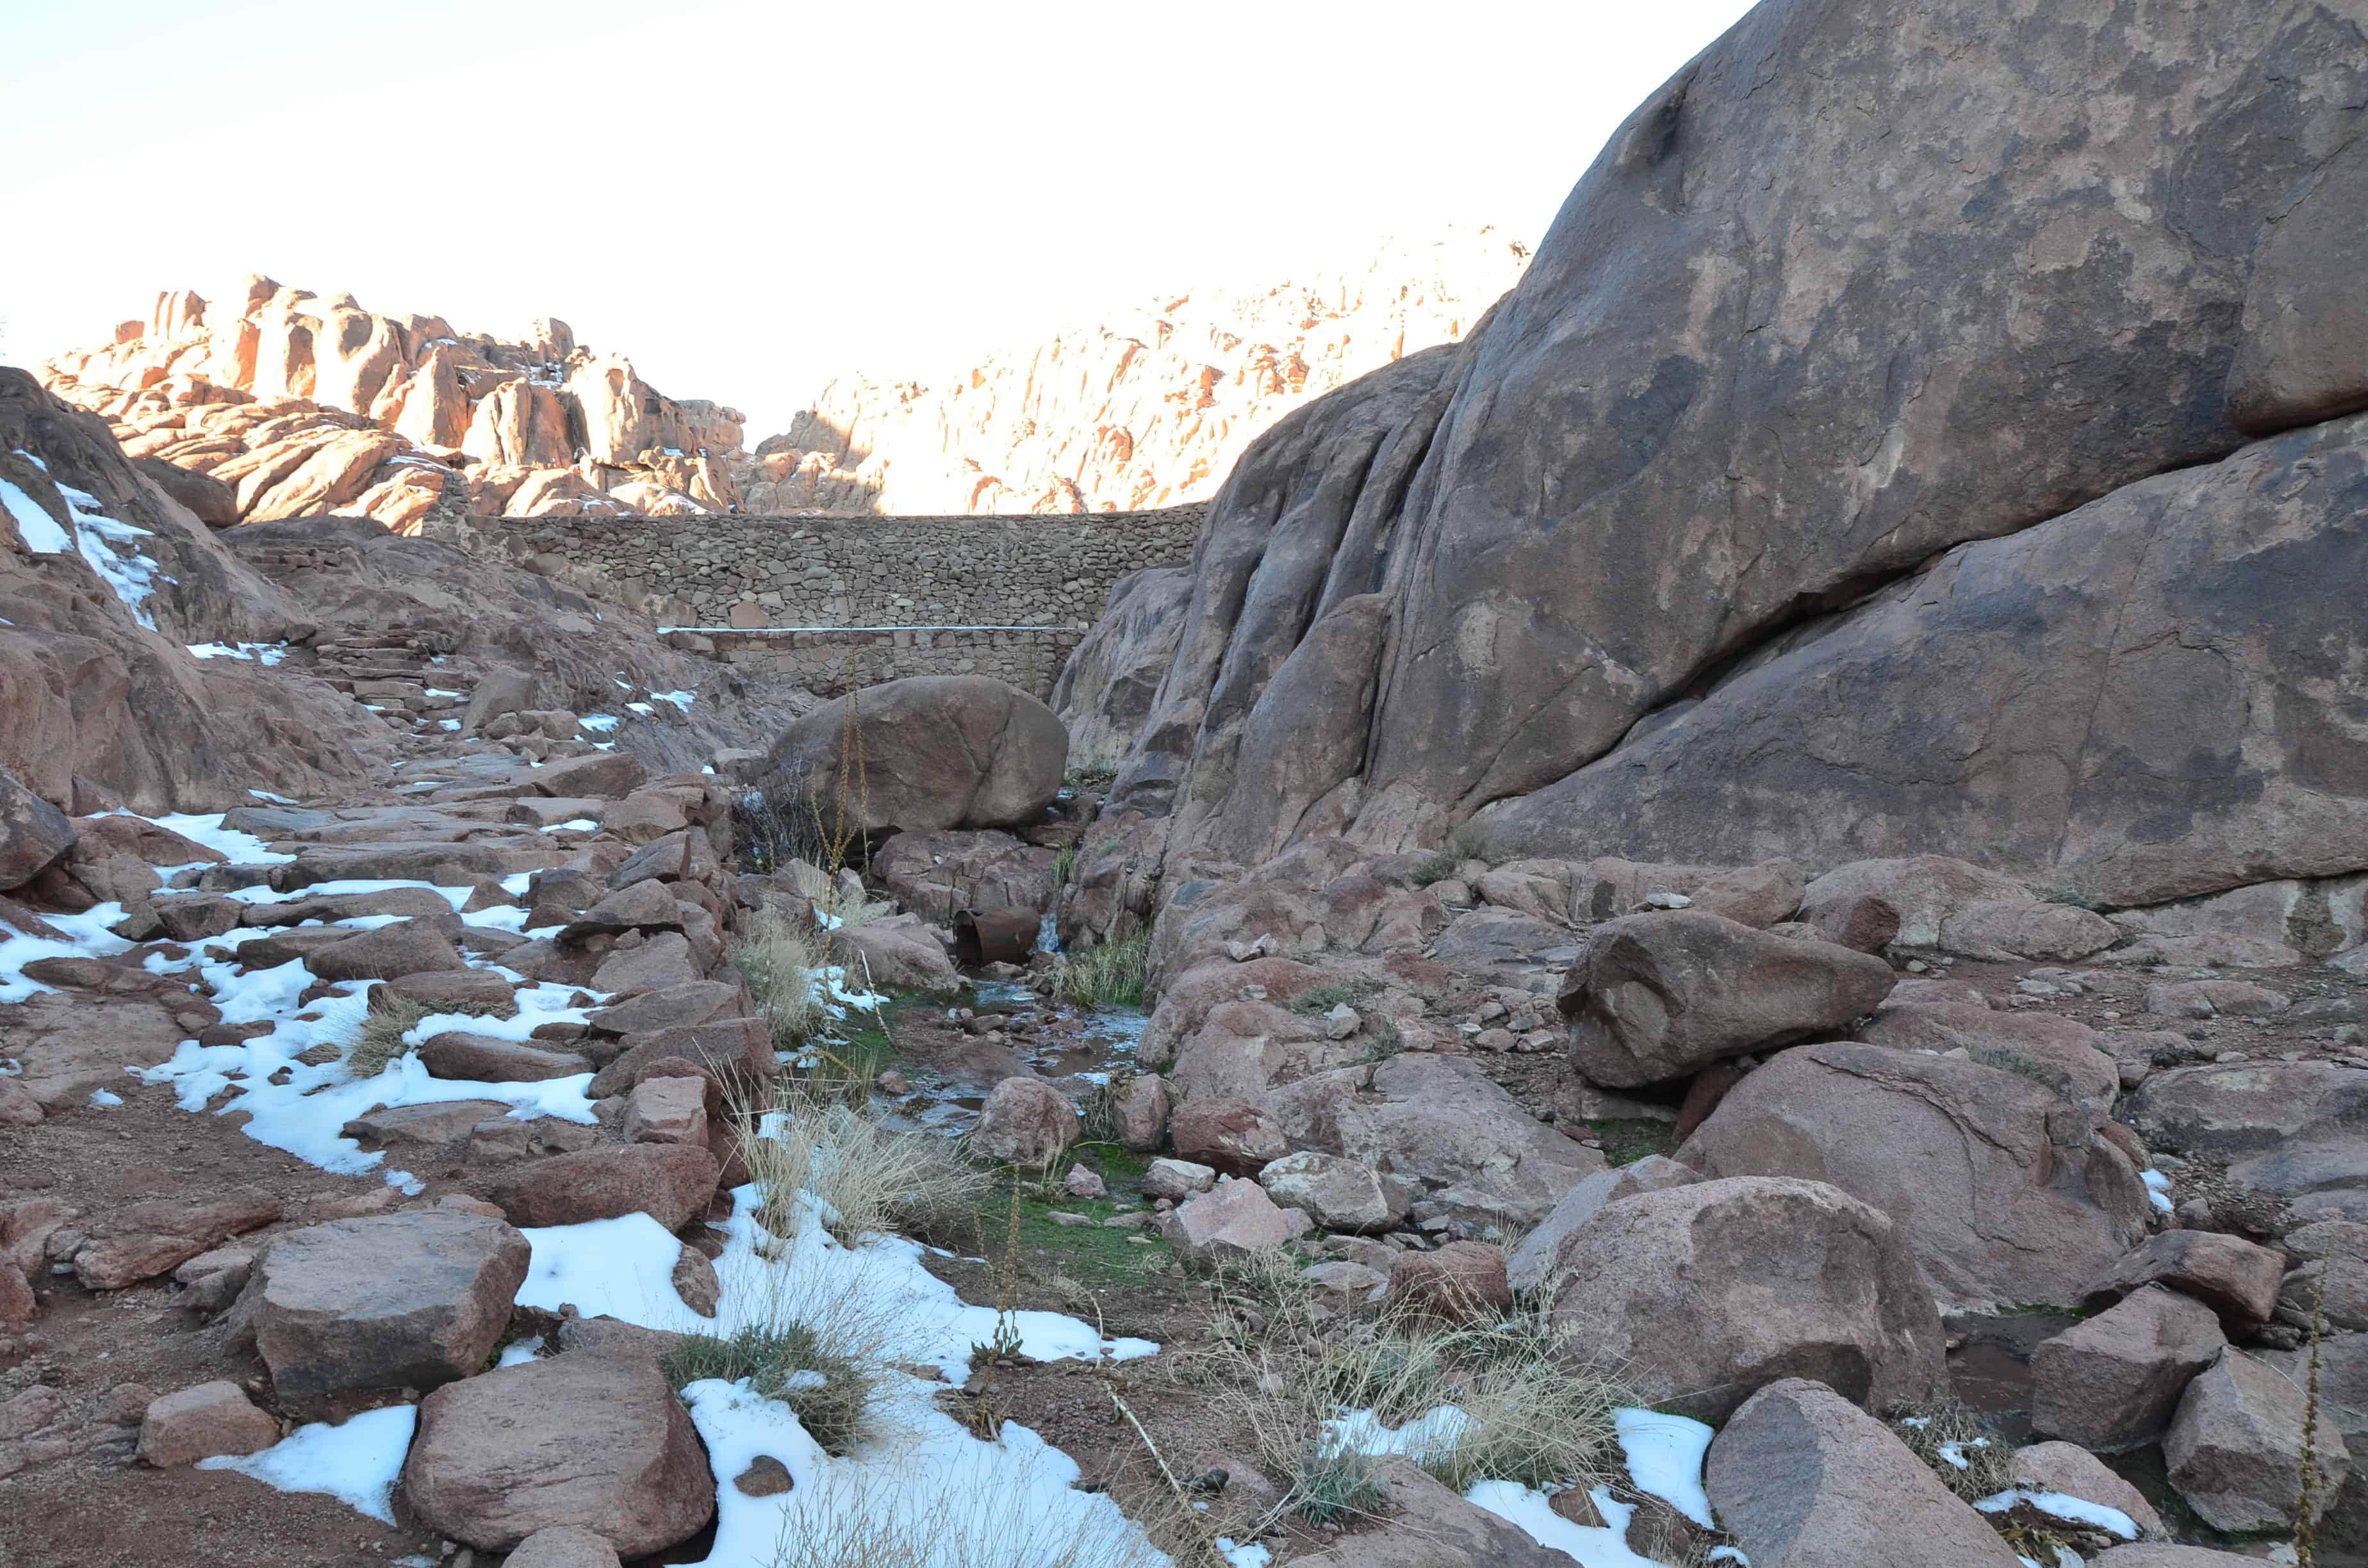 Byzantine dam on the Way of the Steps, Mount Sinai, Egypt